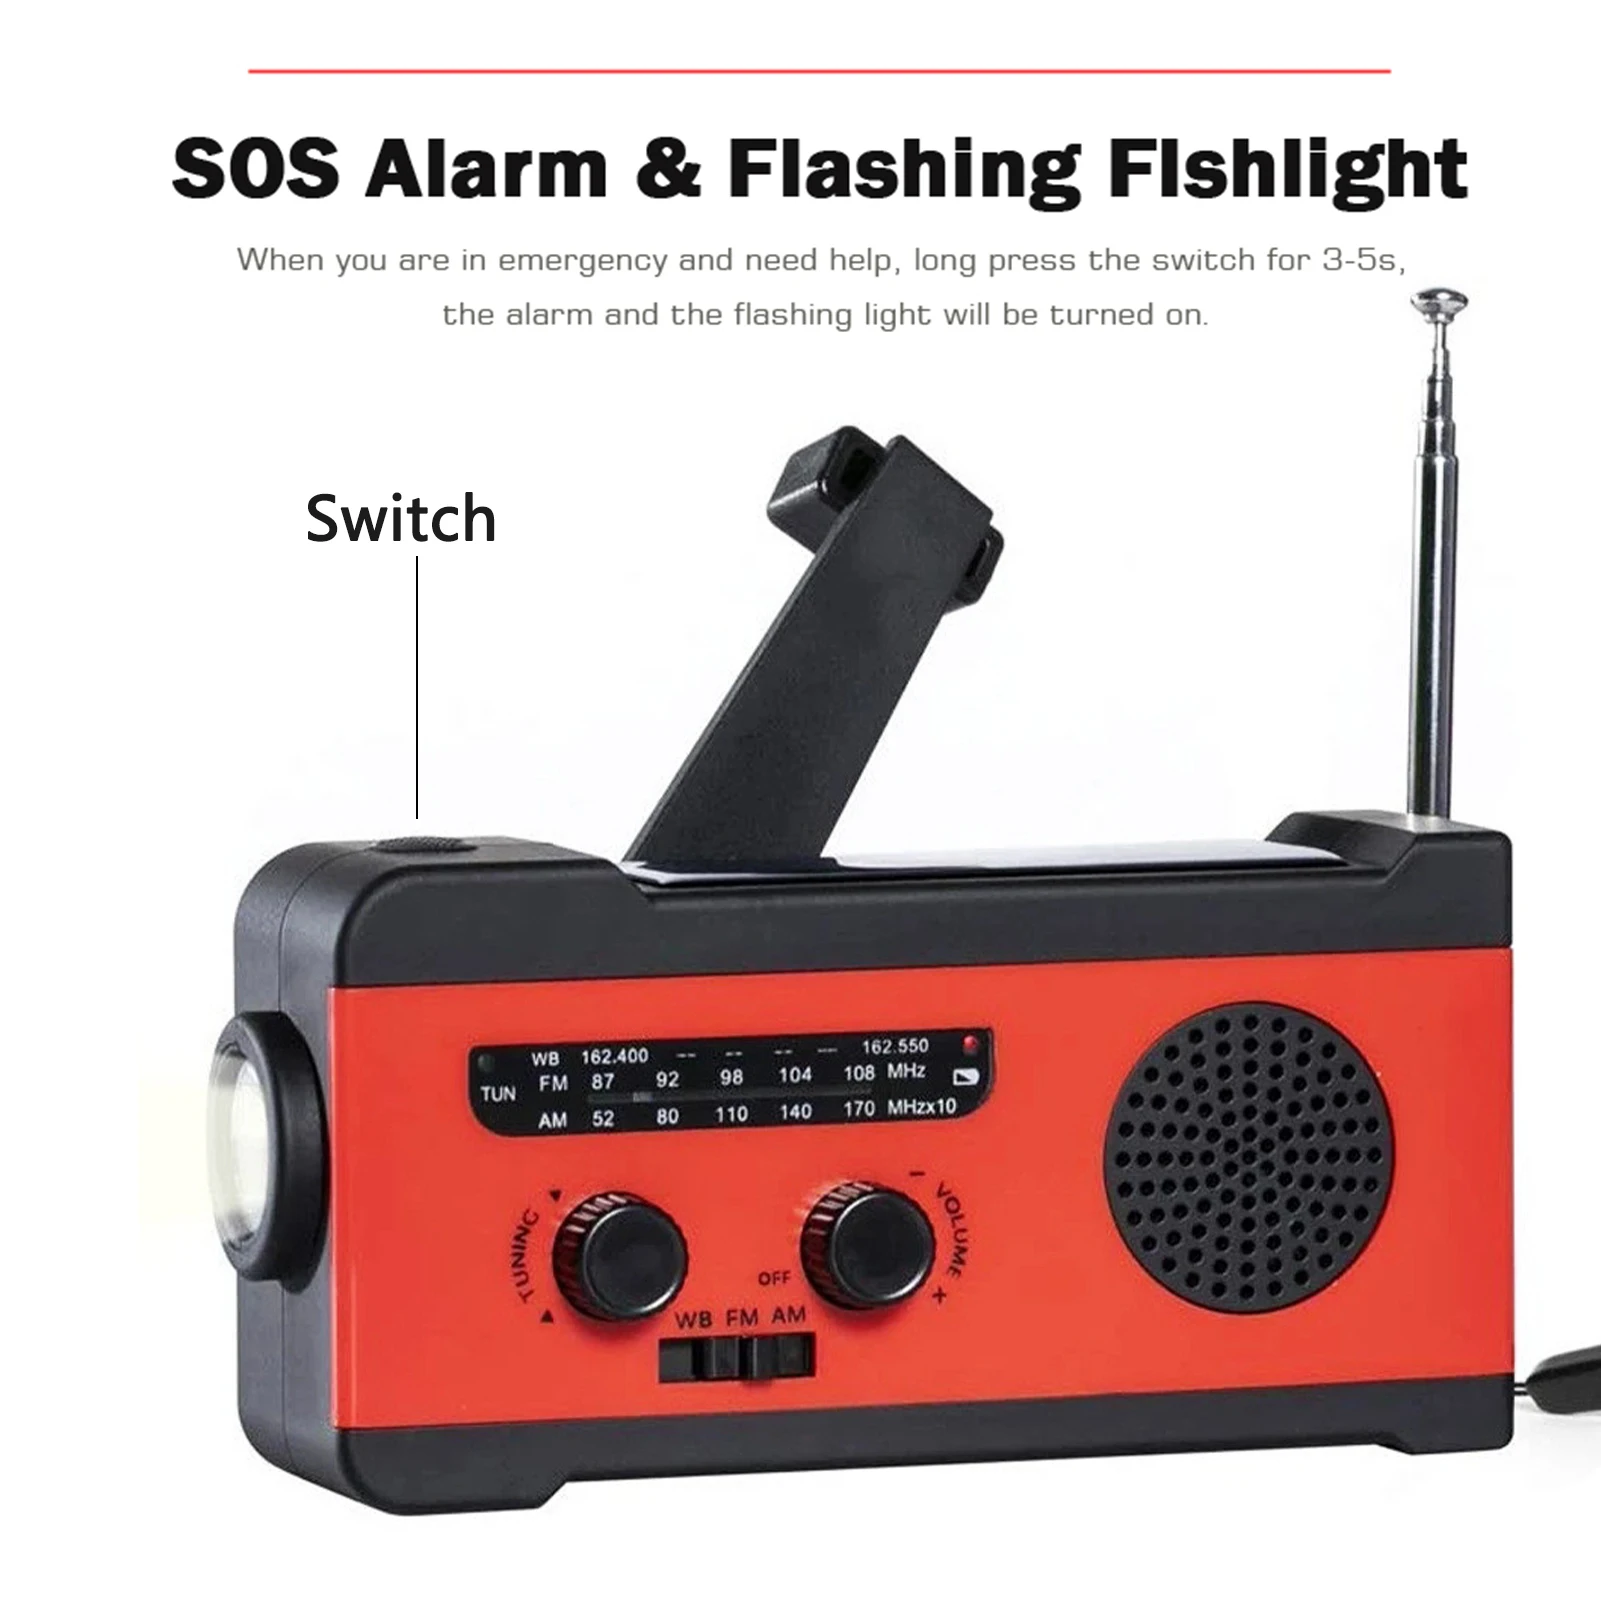 

NOAA Emergency Weather Radio Solar Hand Crank Radio Emegency Flashlights with Motion Sensor Outdoor SOS Alarm Survival Gear